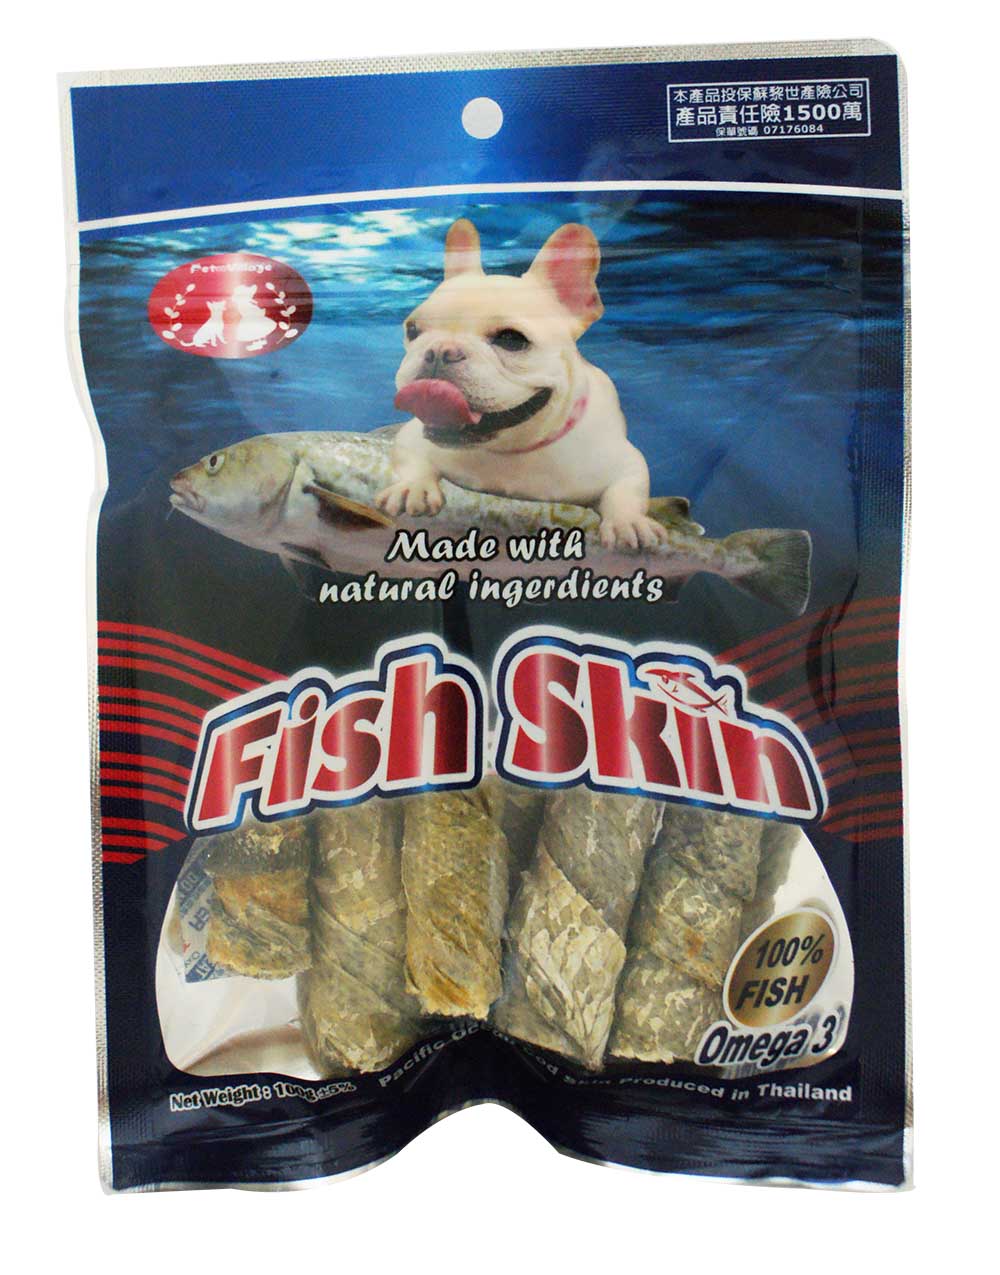 PV鱈魚粗棒-原味
Dog Treat - Cod Skin Thick Original